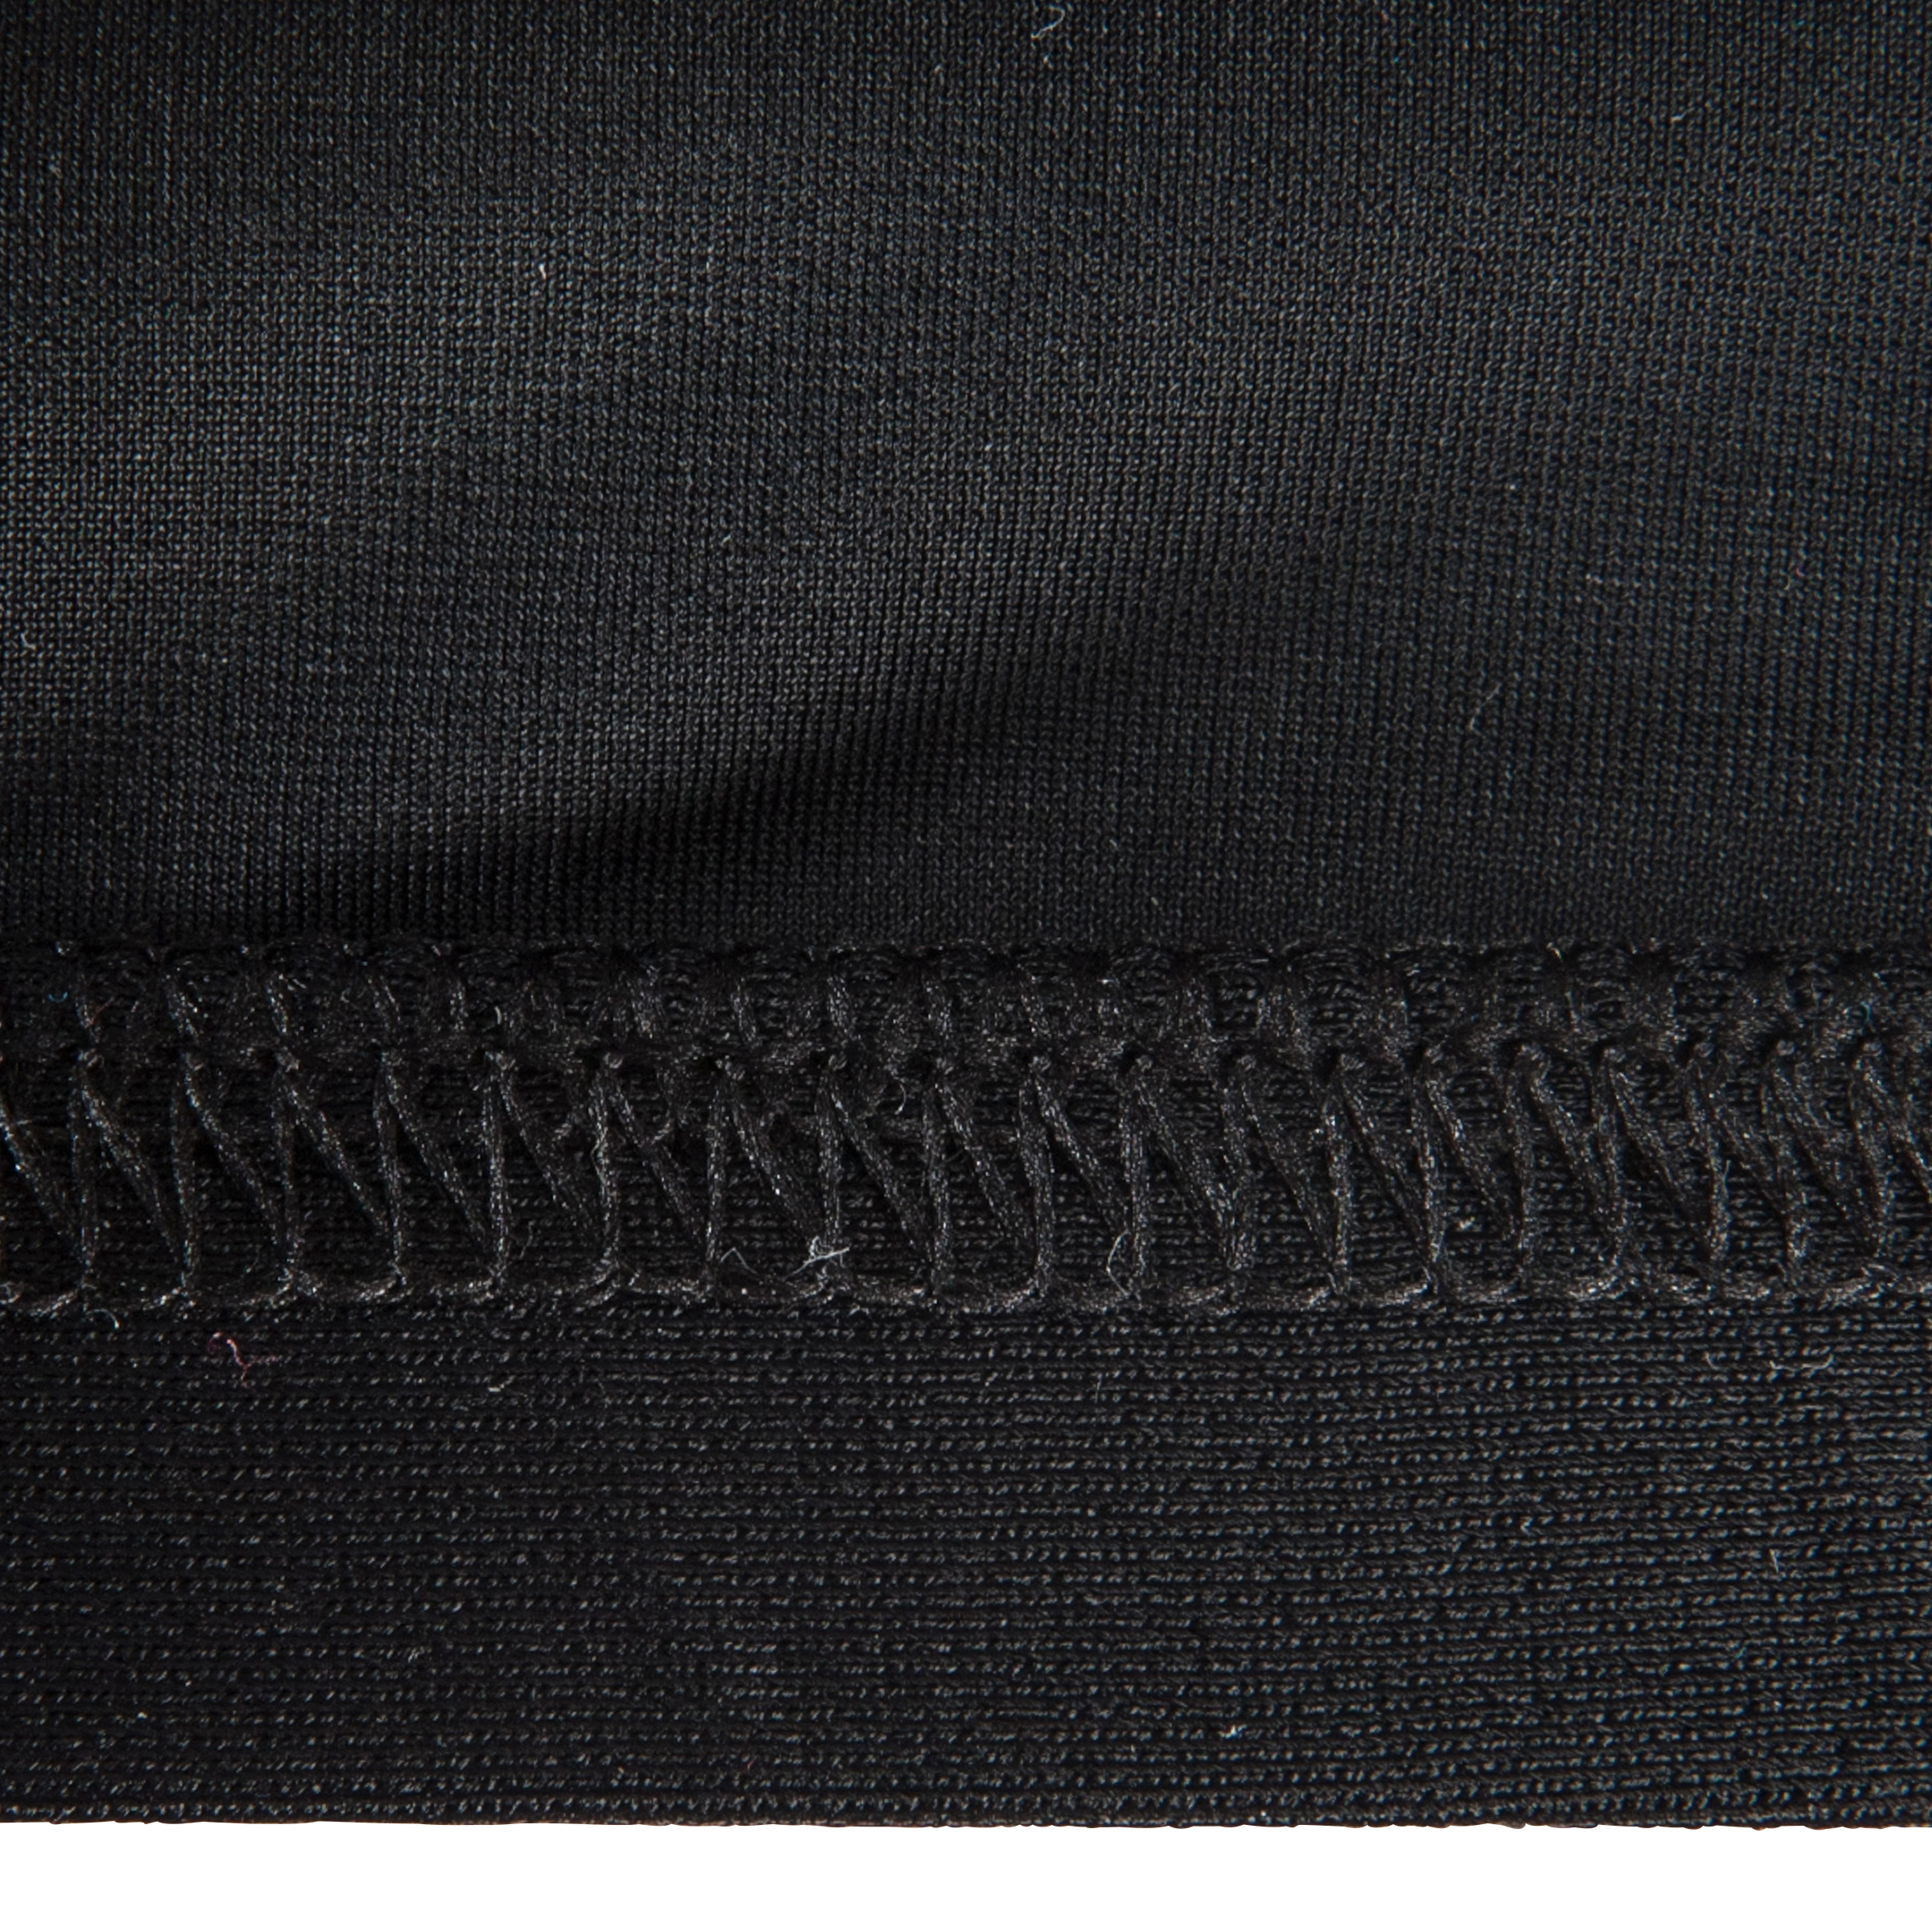 Bonnet de Bain Fantaisie Tissu Noir avec scratch - Bonnet de Bain